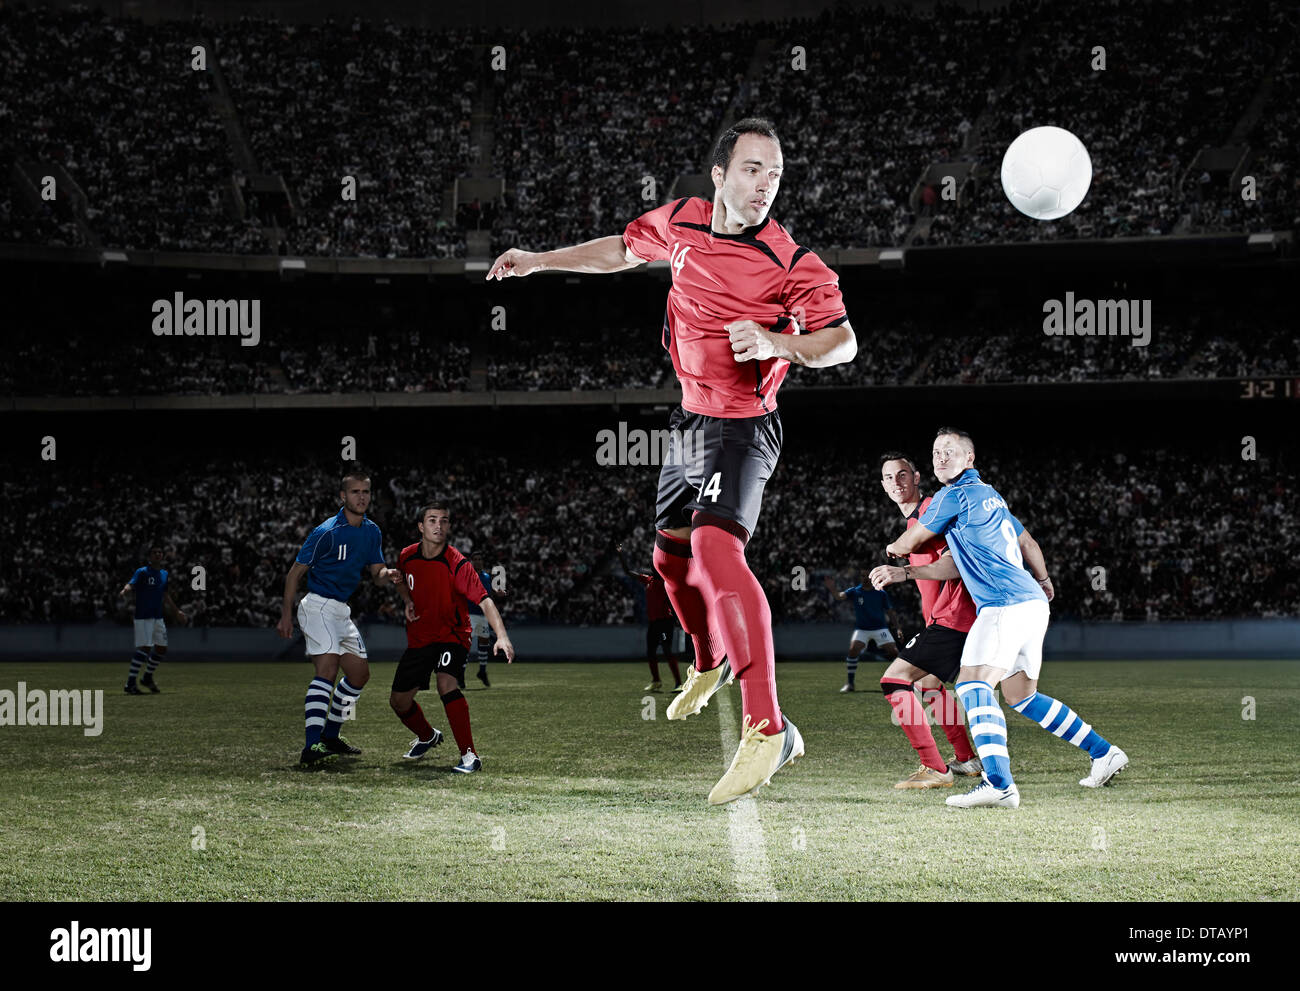 Fußballspieler springen auf Feld Stockfoto